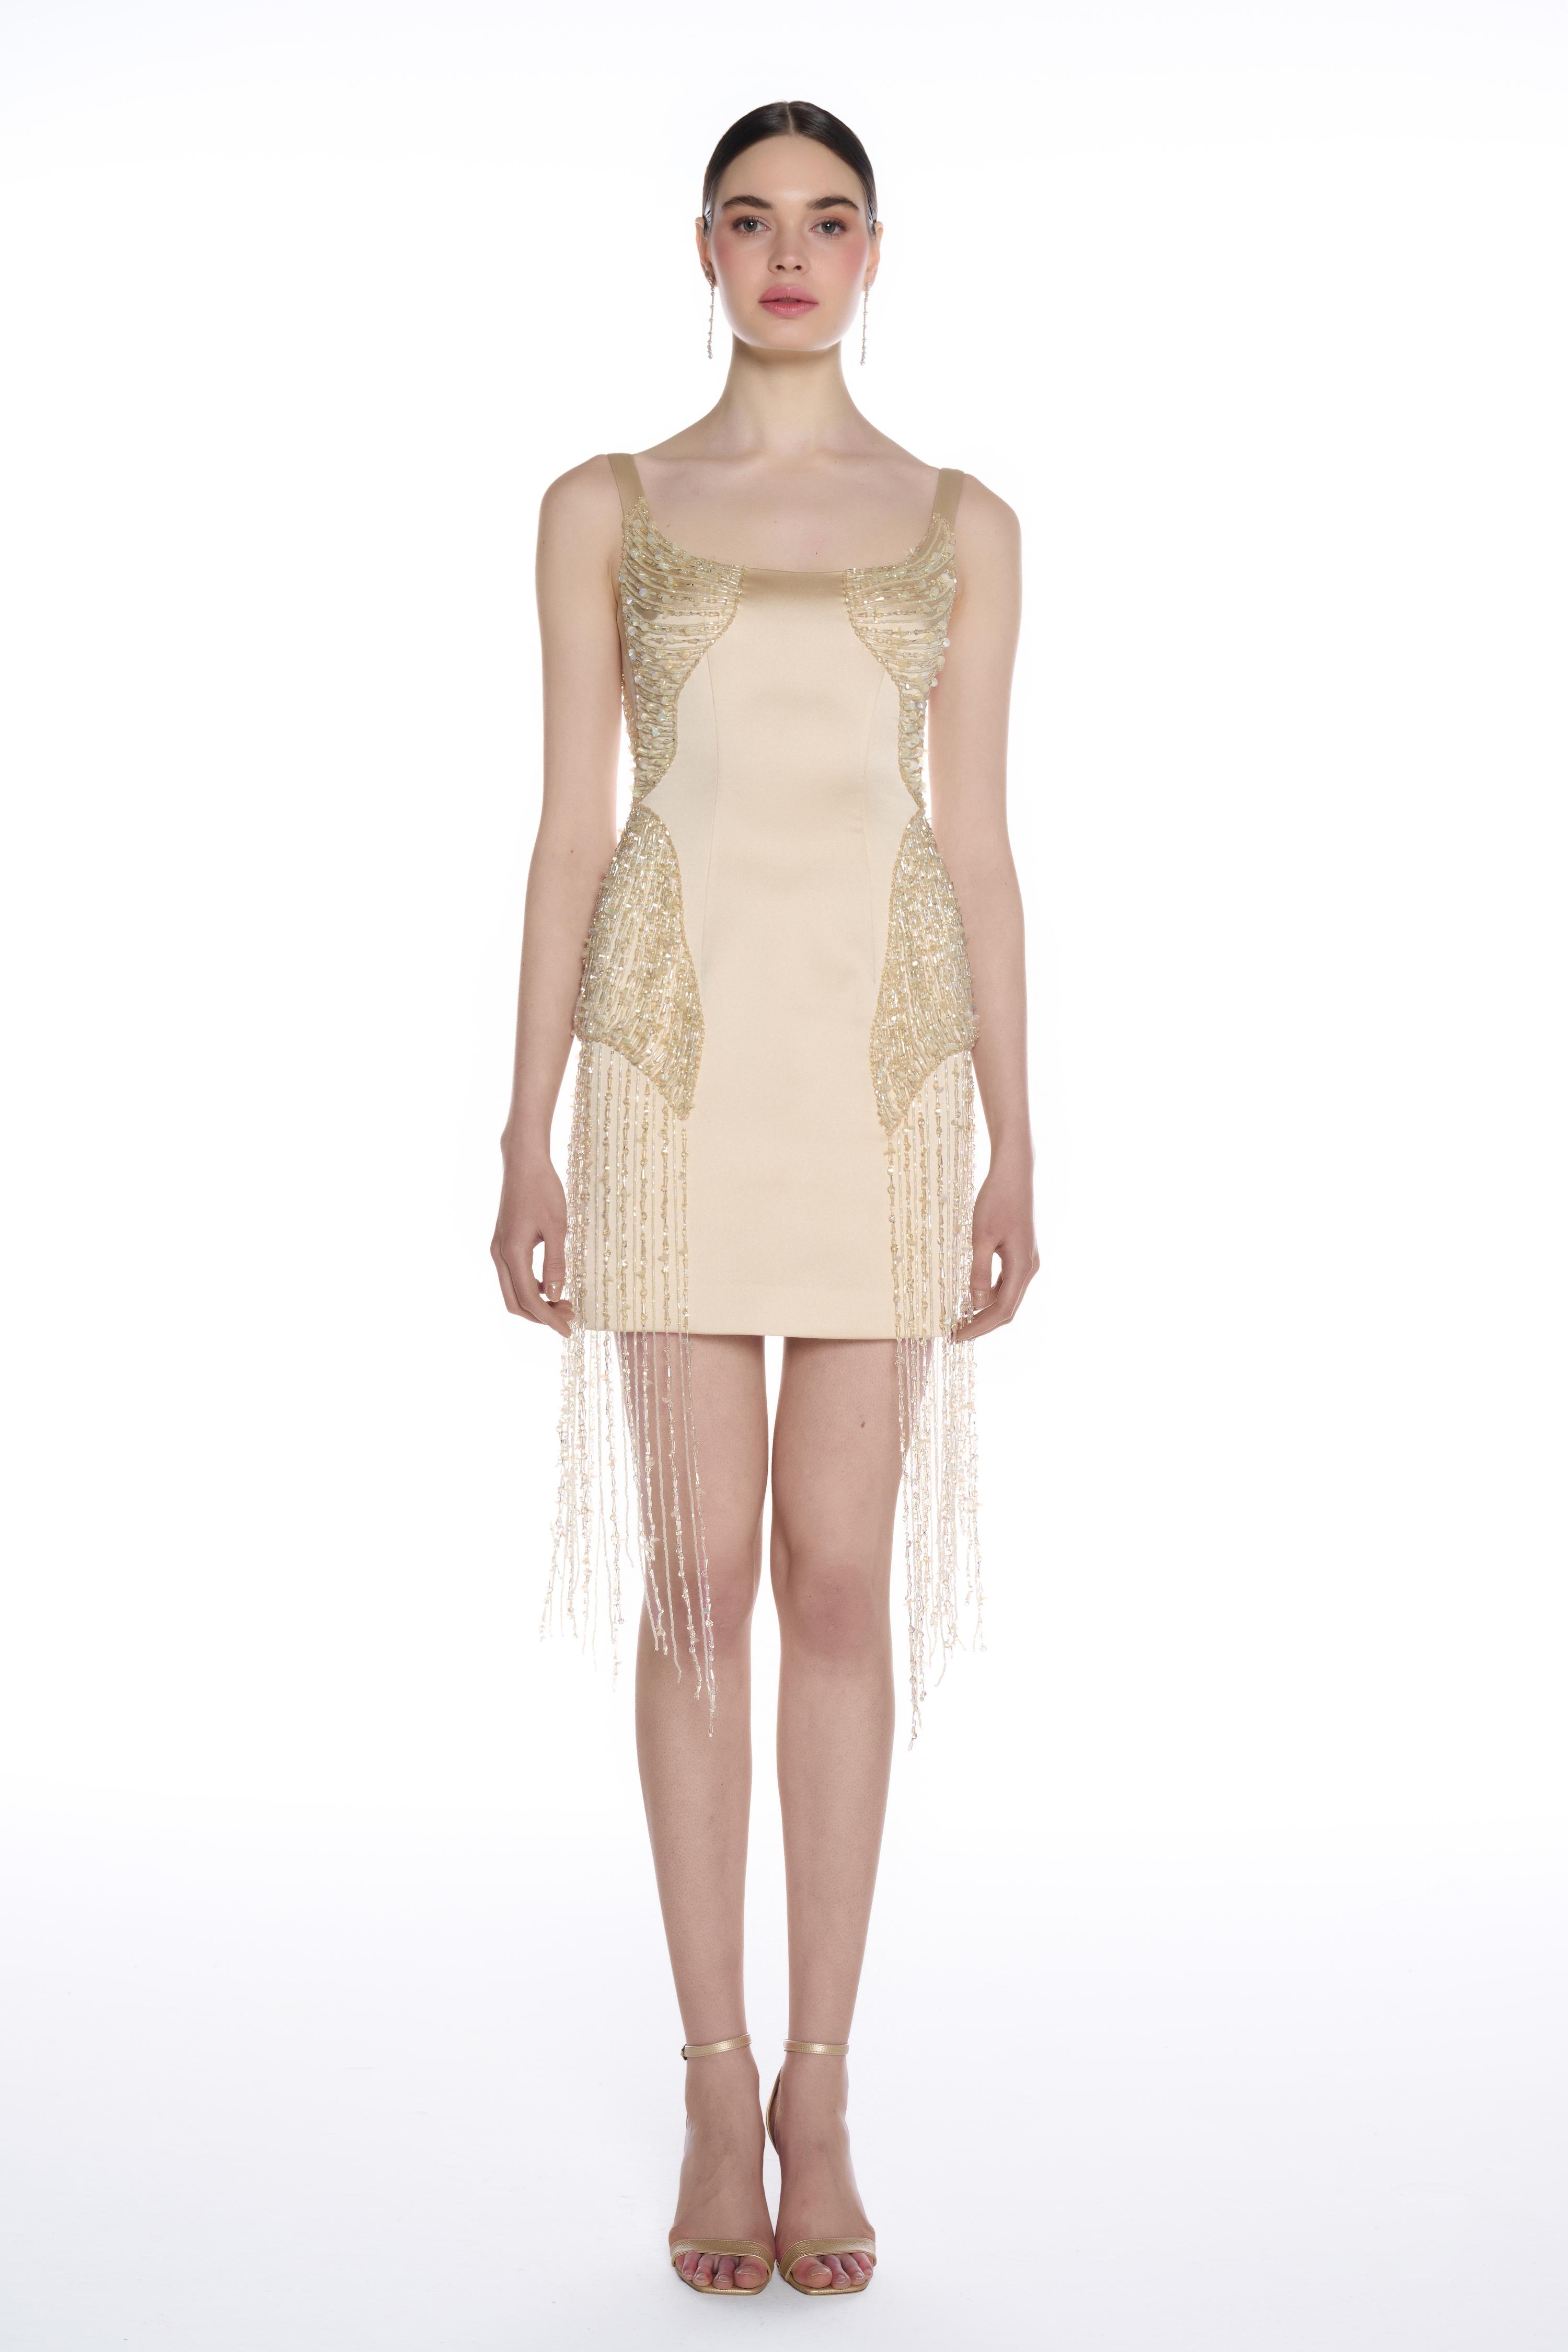 R34 - U-Neckline, Fully Crystal Beaded Bodice and Skirt, Handmade Beaded Fringed Hem, Mini Dress